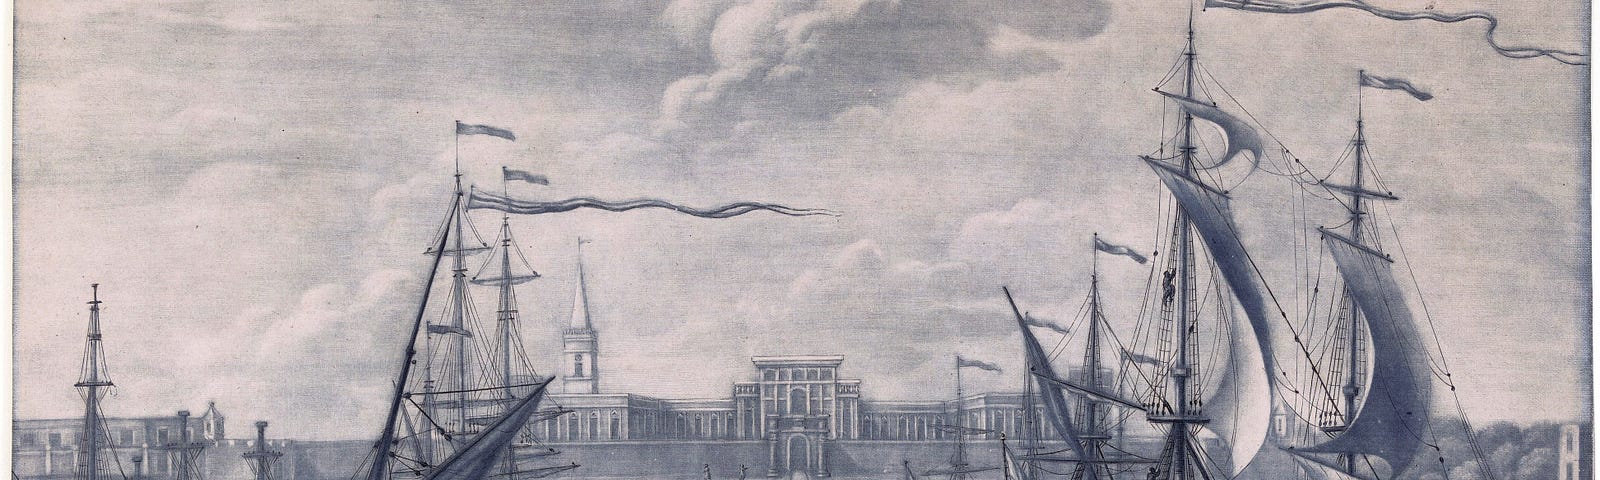 Fort William: the headquarters of the East India Company in Calcutta, India